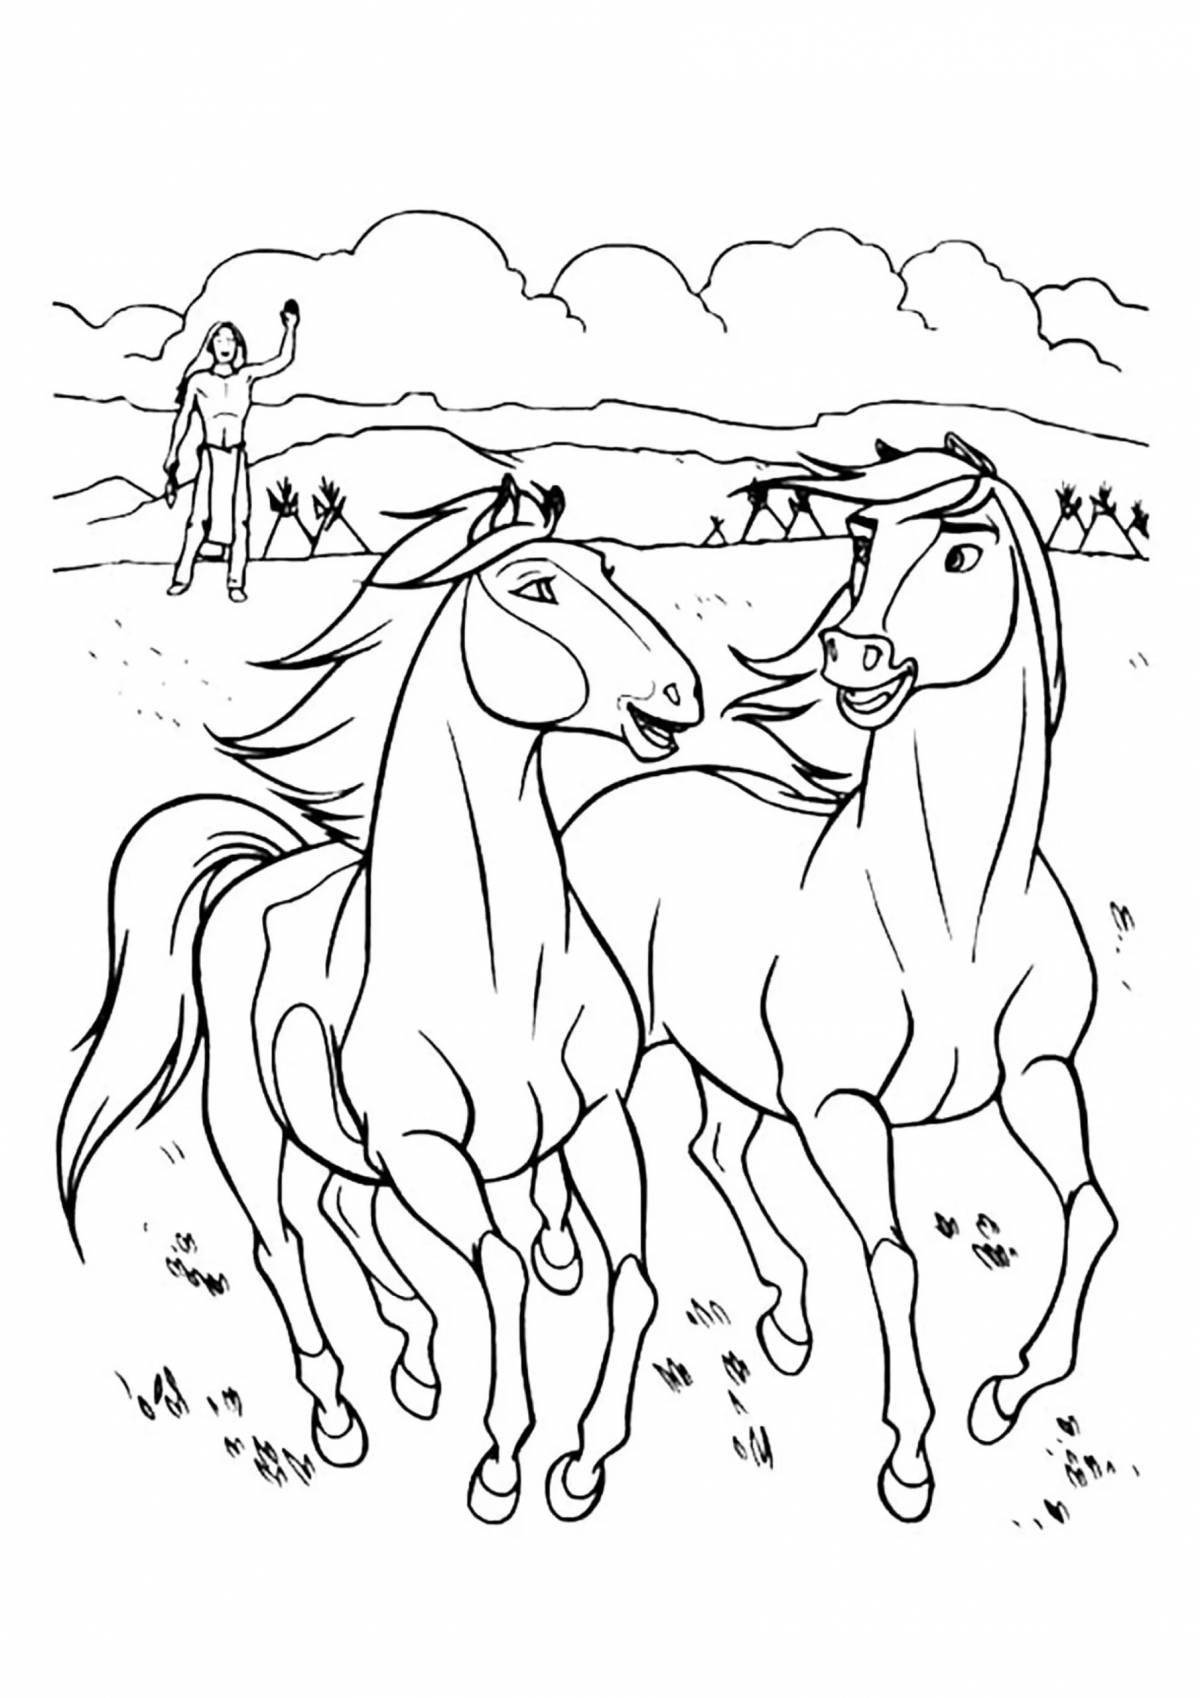 Royal spirit horse coloring book